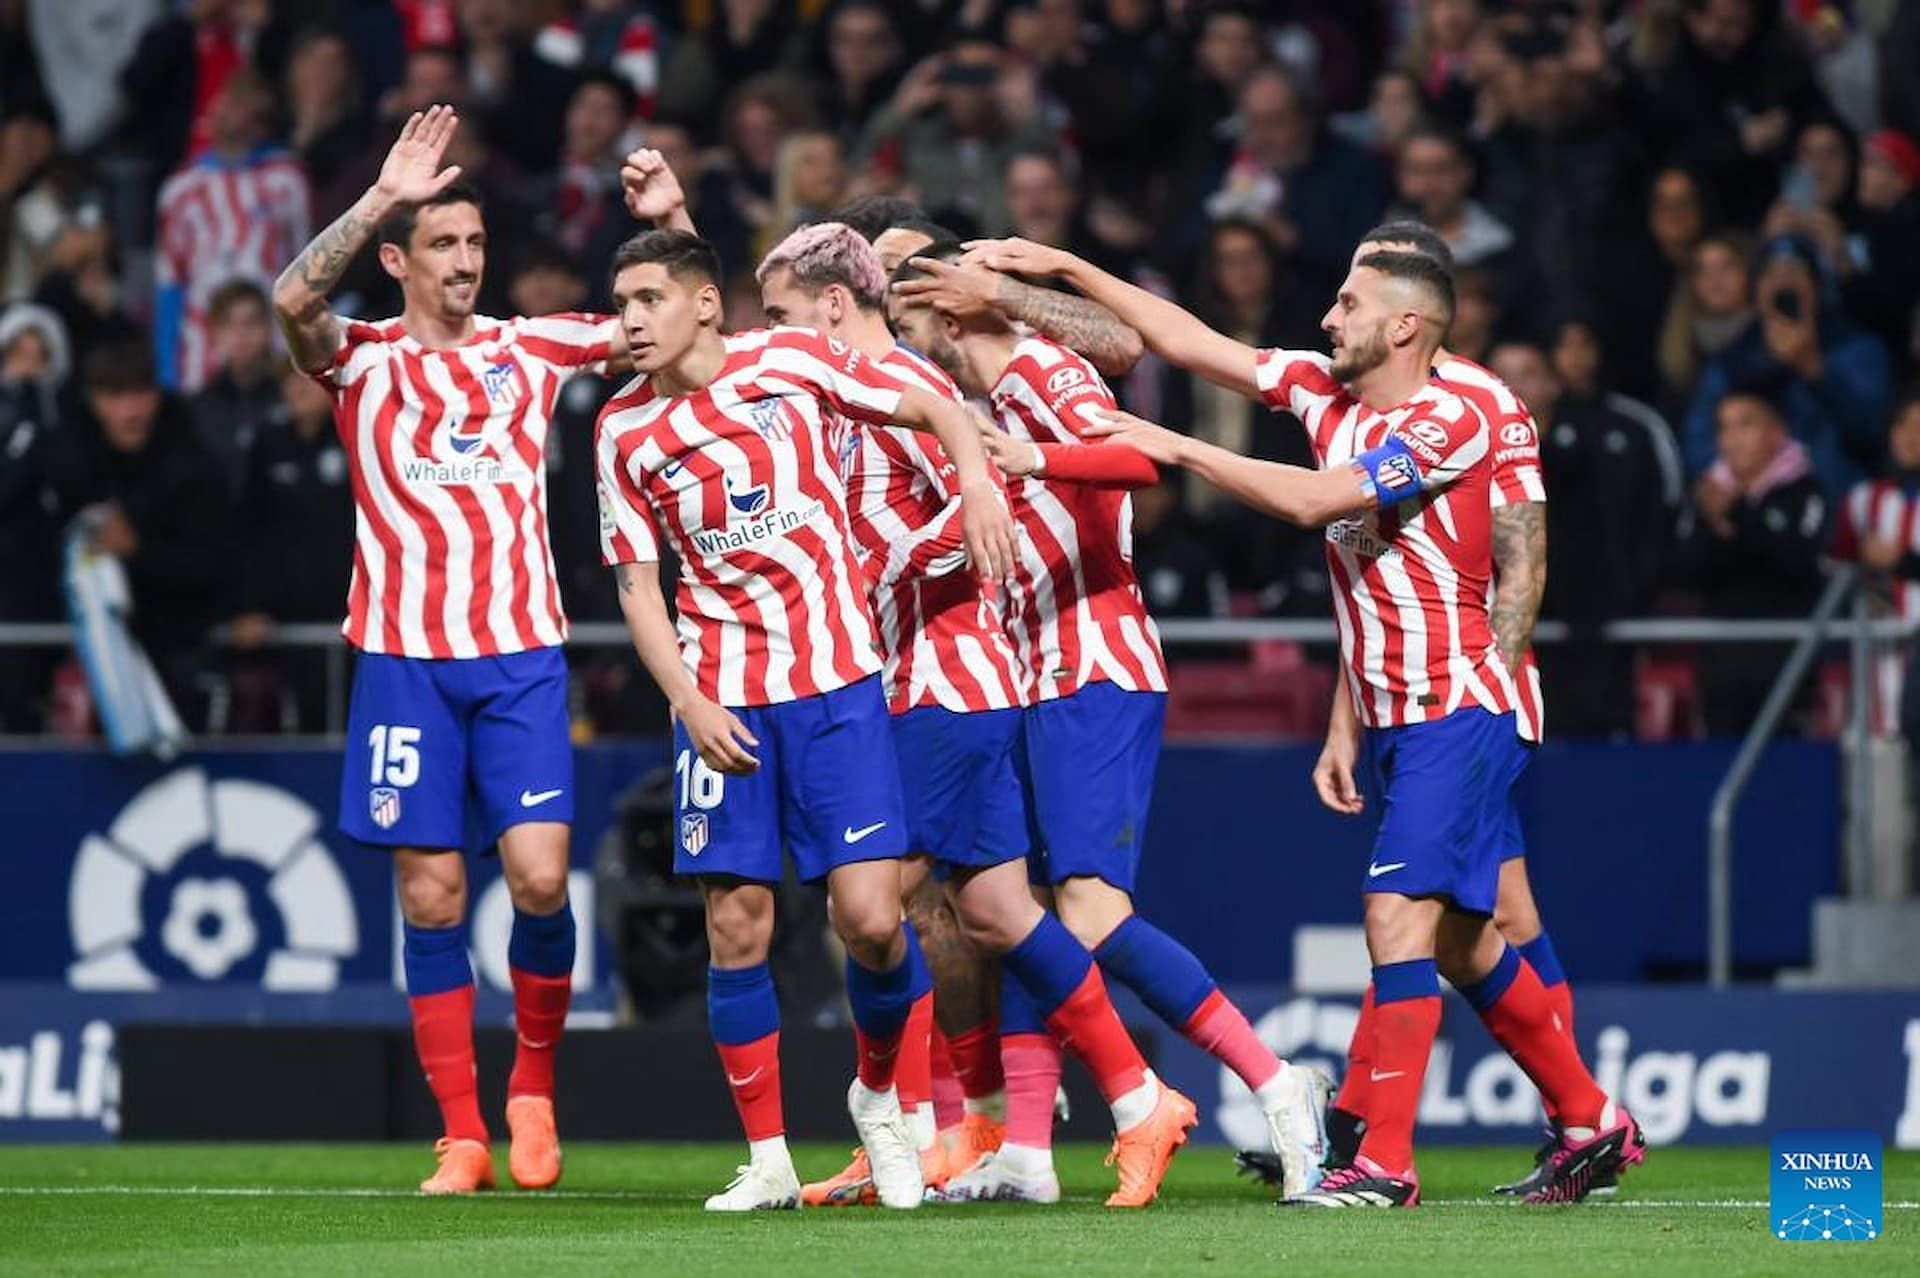 Atletico Madrid celebrates a crucial goal (Image via Getty)